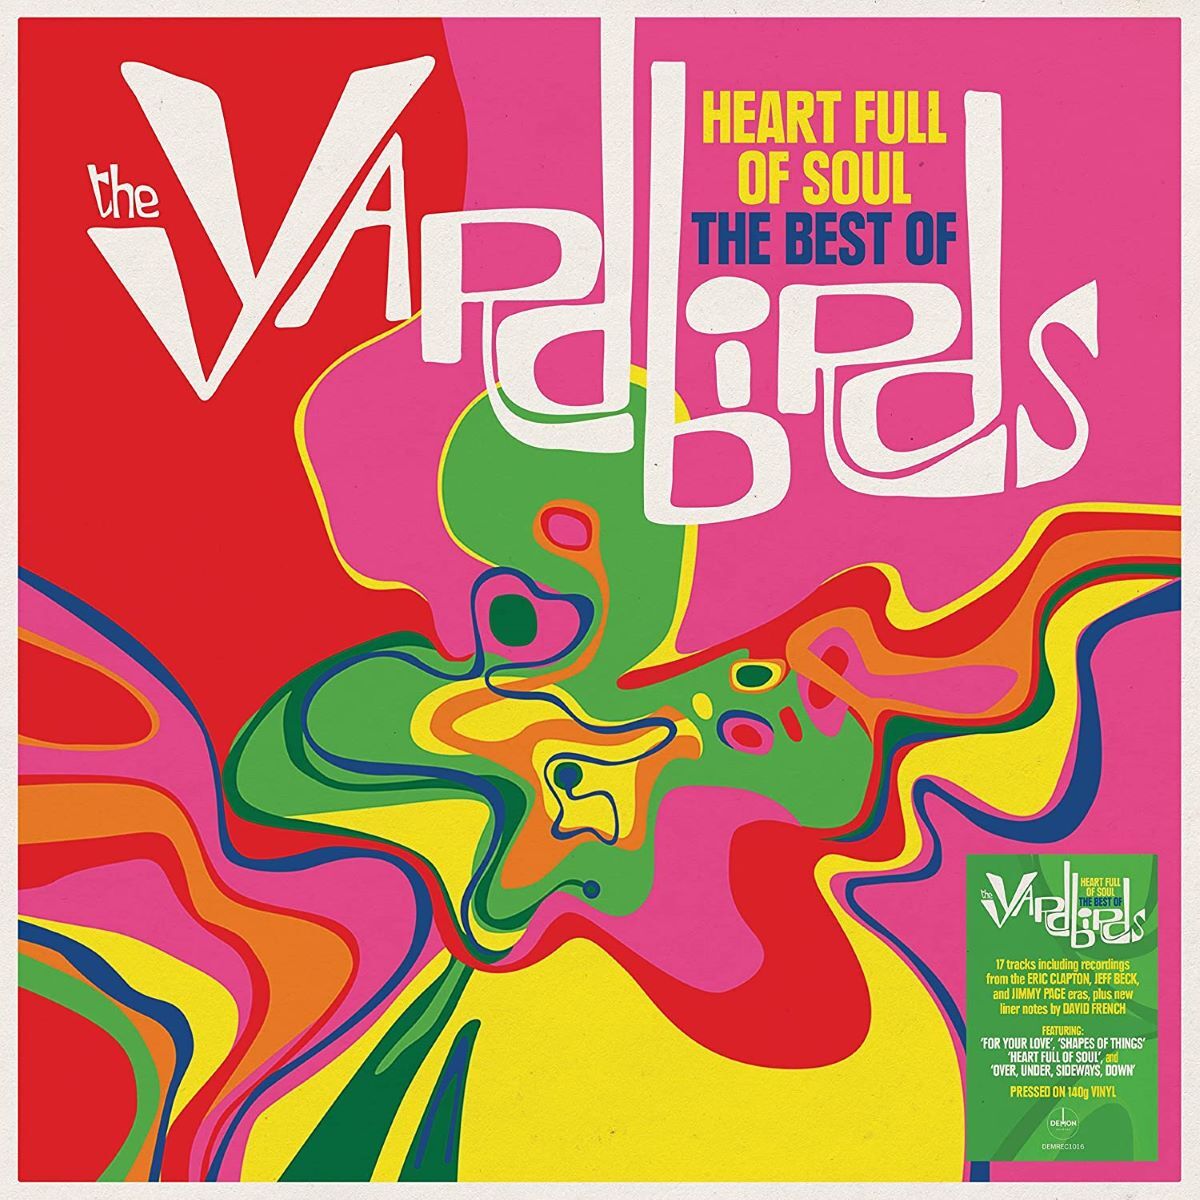 THE YARDBIRDS - HEART FULL OF SOUL: THE BEST OF THE YARDBIRDS - VINYL LP - Wah Wah Records